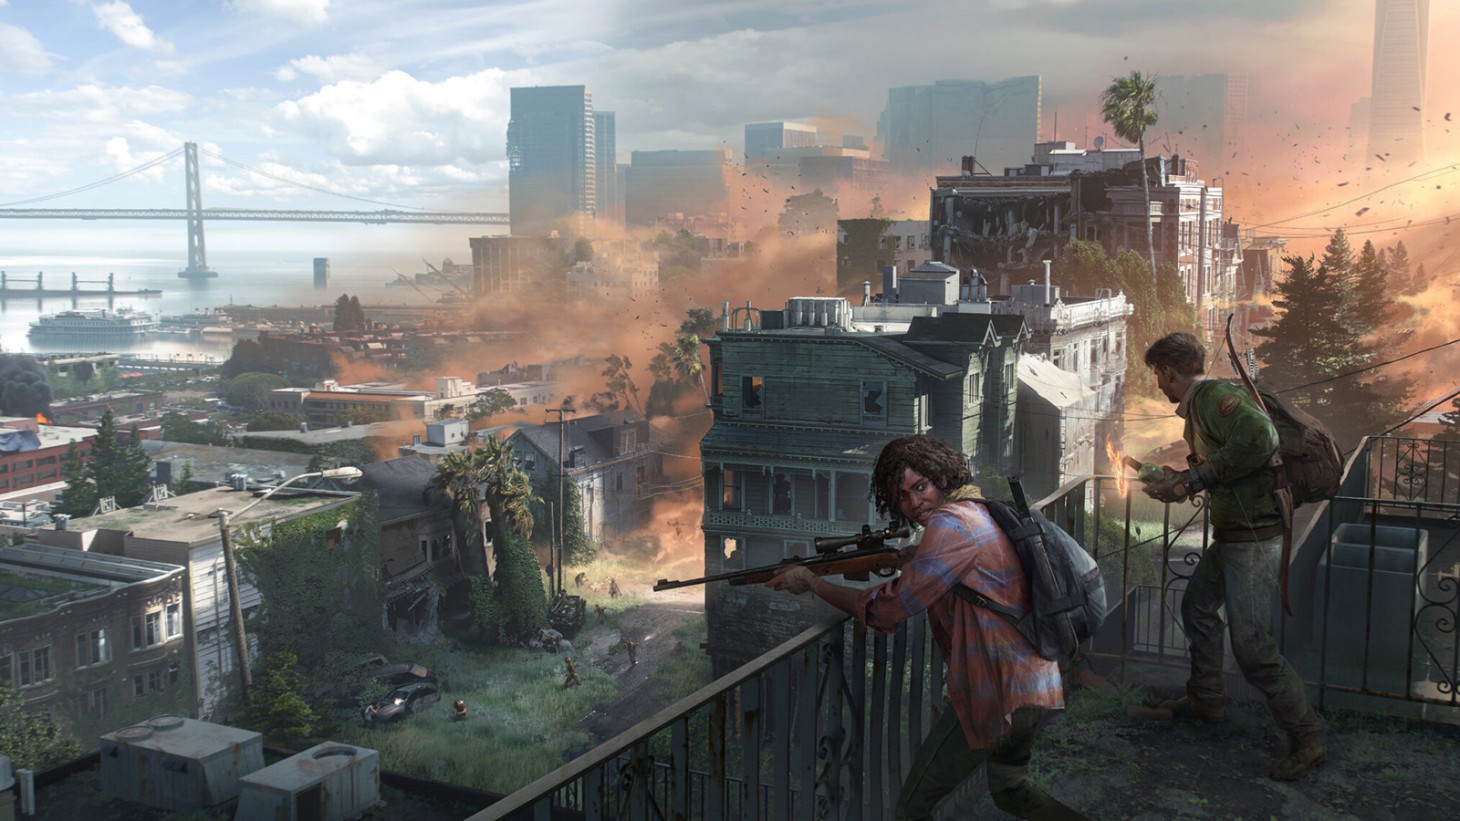 Buy The Last Of Us - PS3? 100% Guarantee